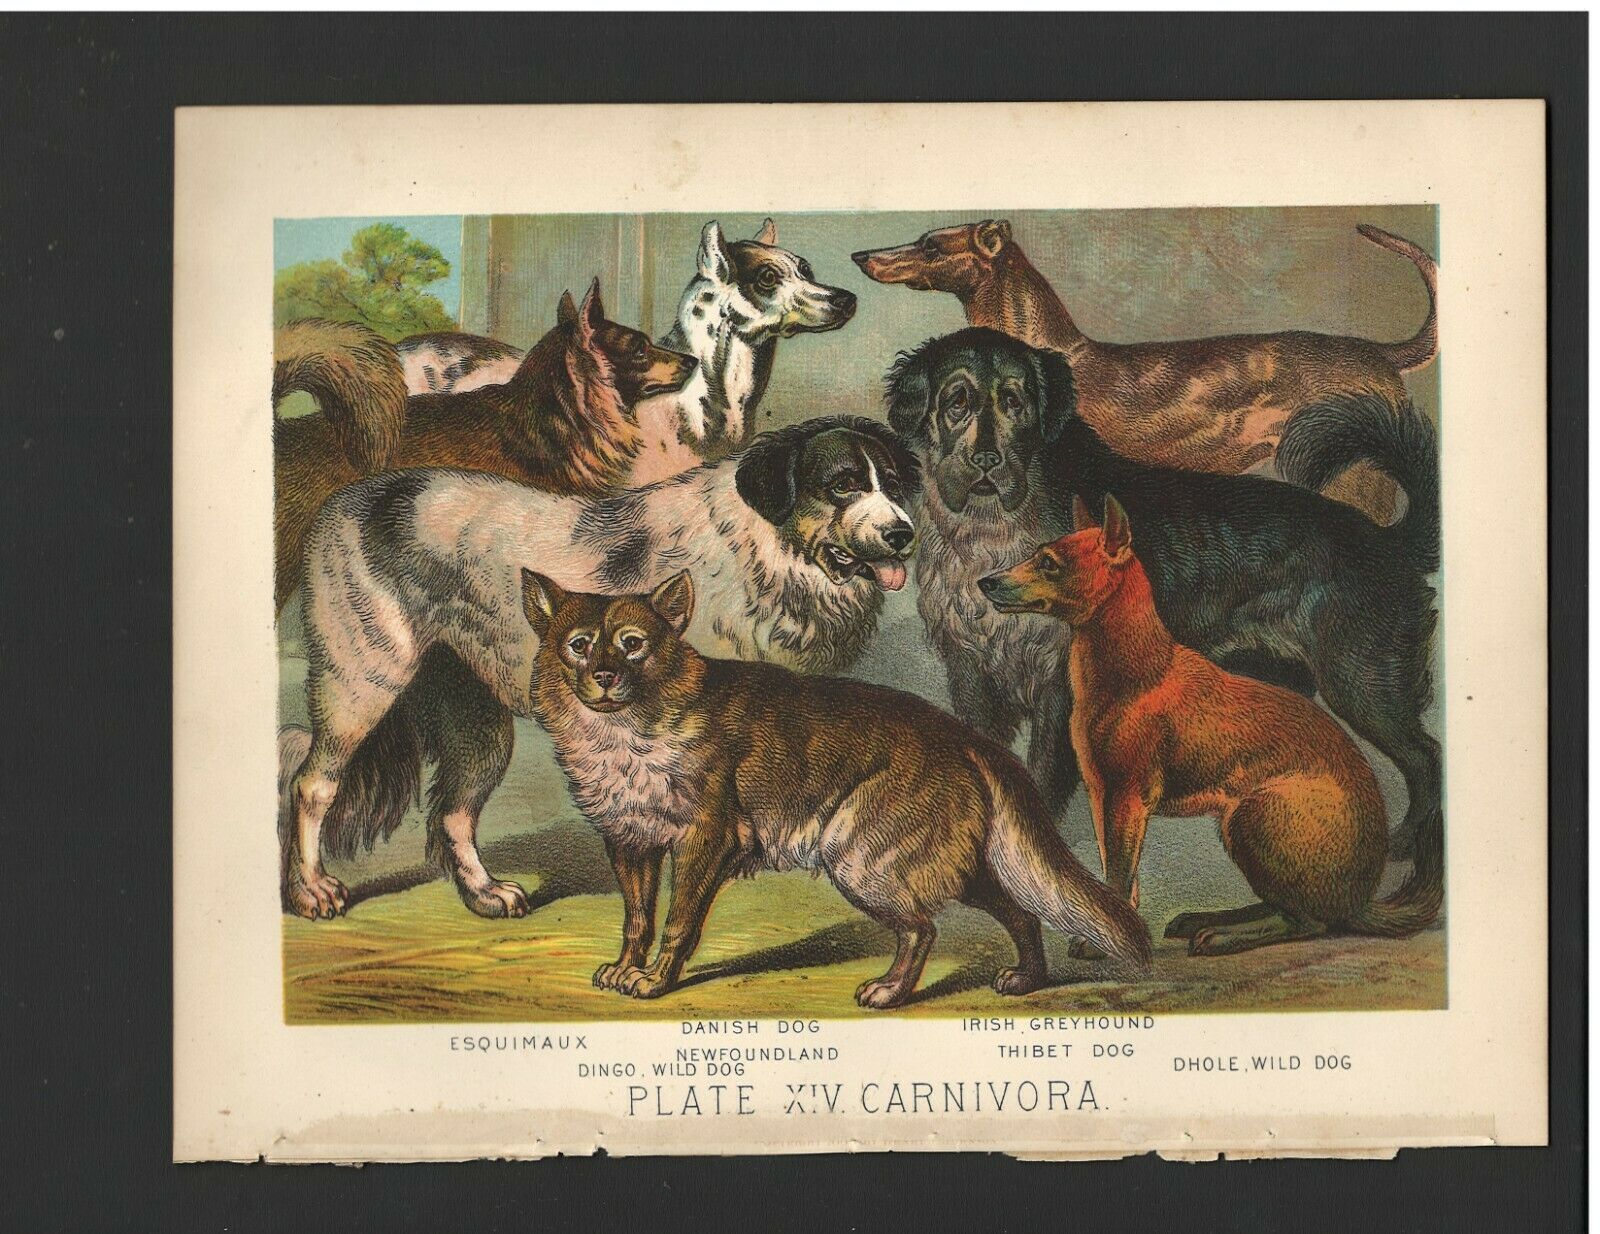 Antique Color Plates (1880) – Esquimaux, Danish Dog, Dingo, Greyhound, Dhole